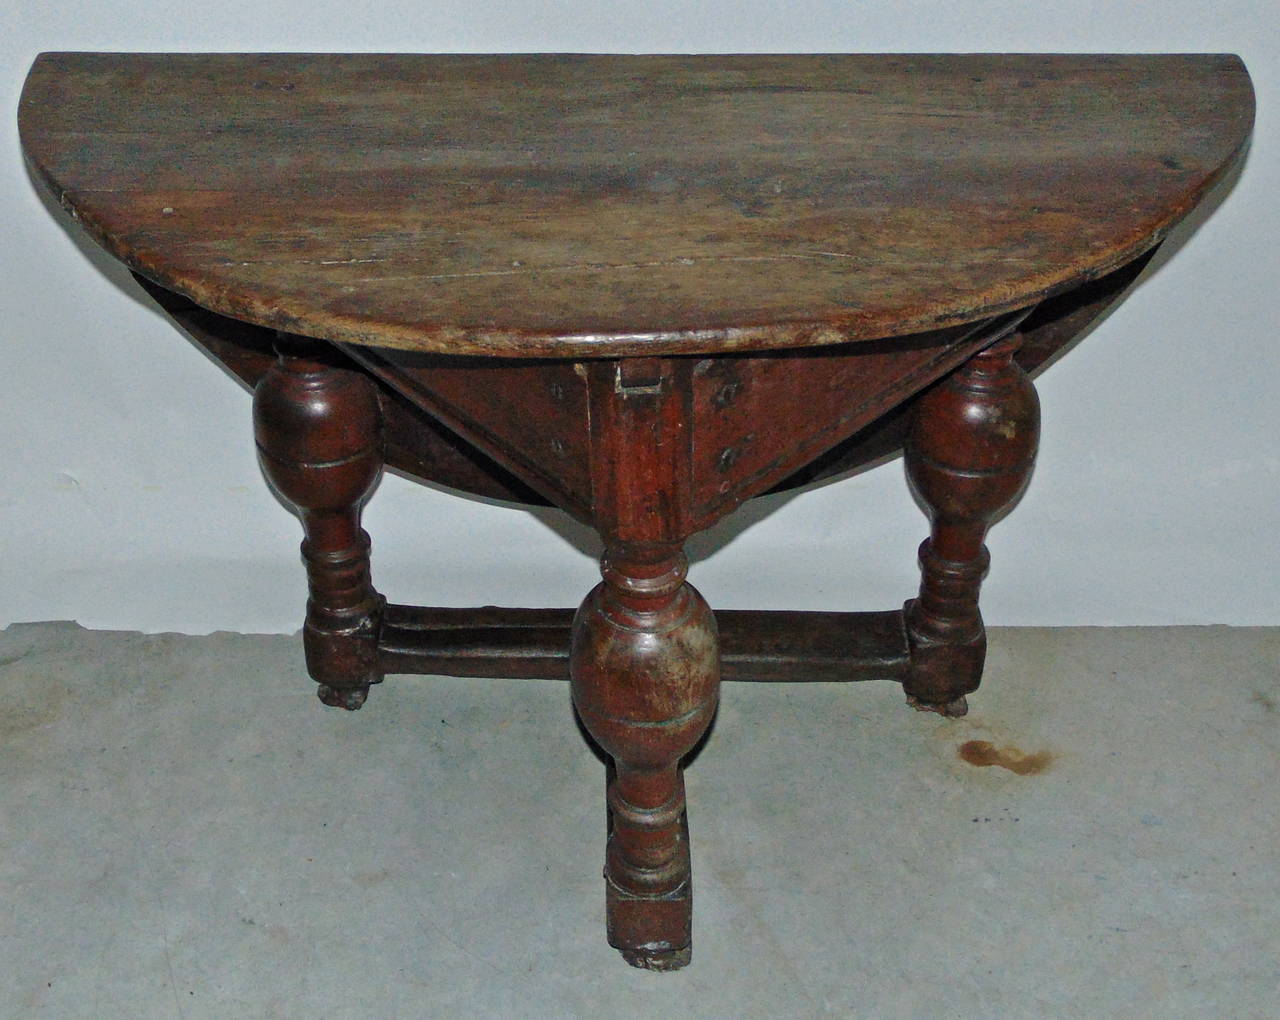 Turned Period 17th Century Dutch Oak Drop-leaf Table in Original Surface